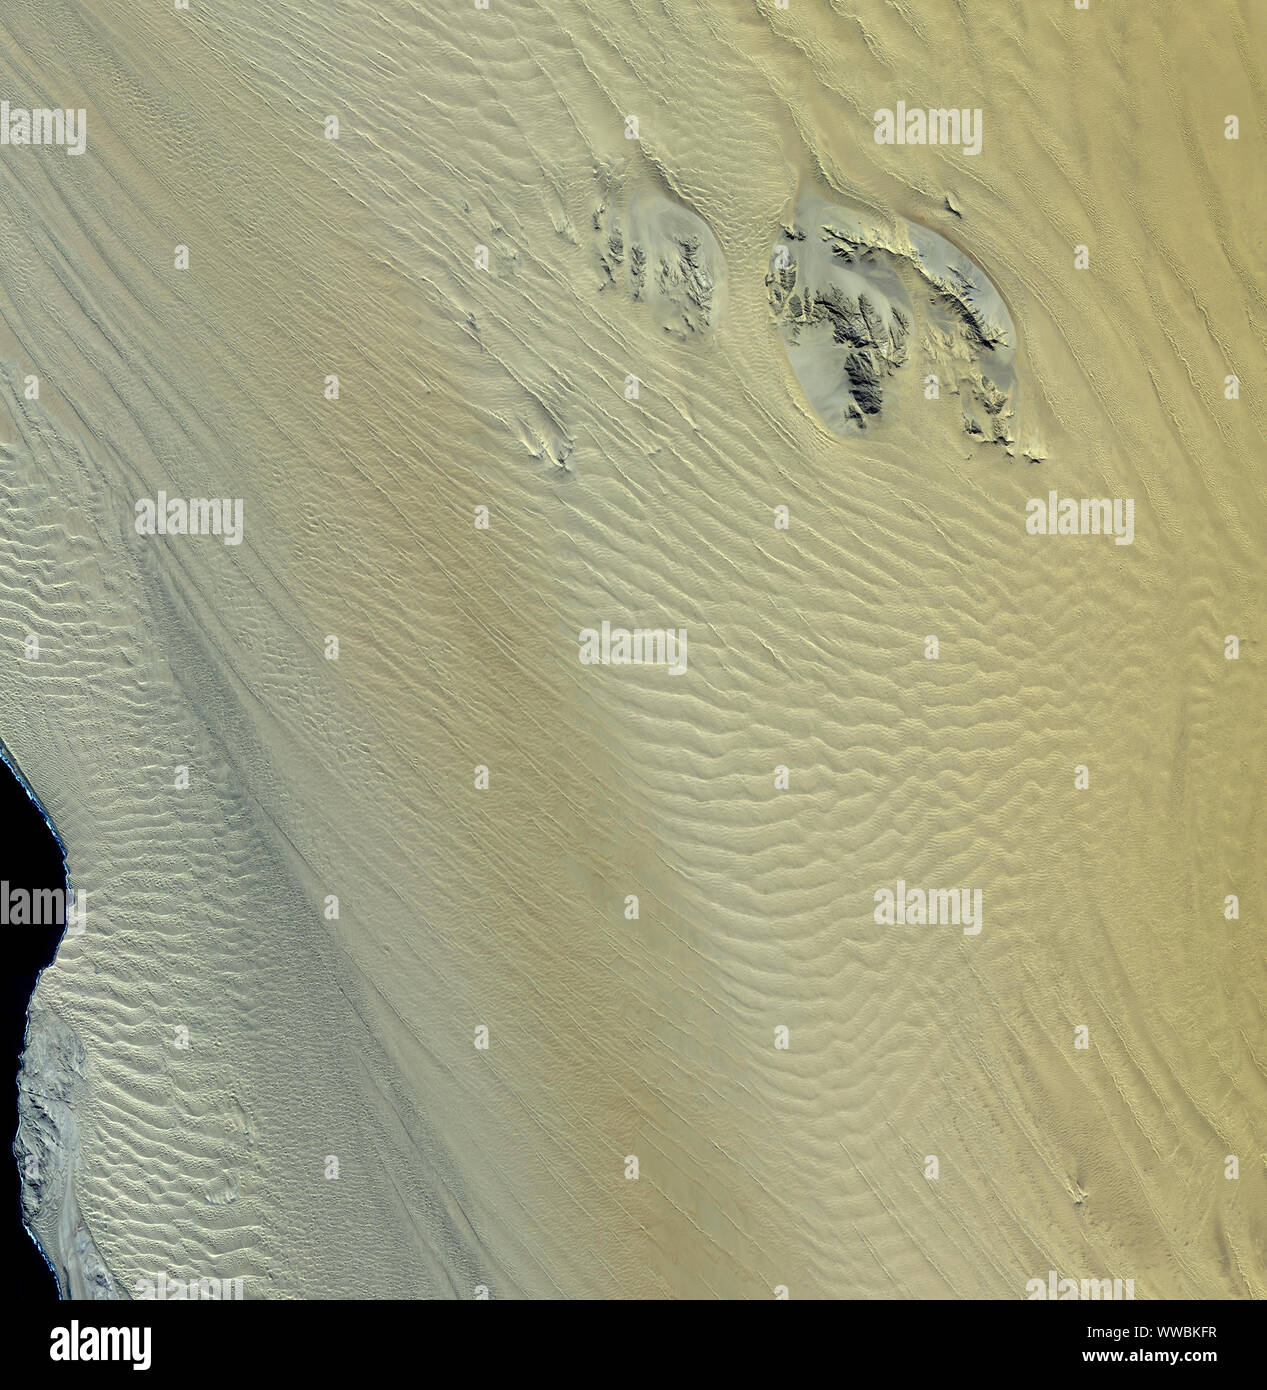 Namib Desert, coastal desert in southern Africa, central Namibia, linear and longitudinal sand dunes, by NASA/DPA Stock Photo